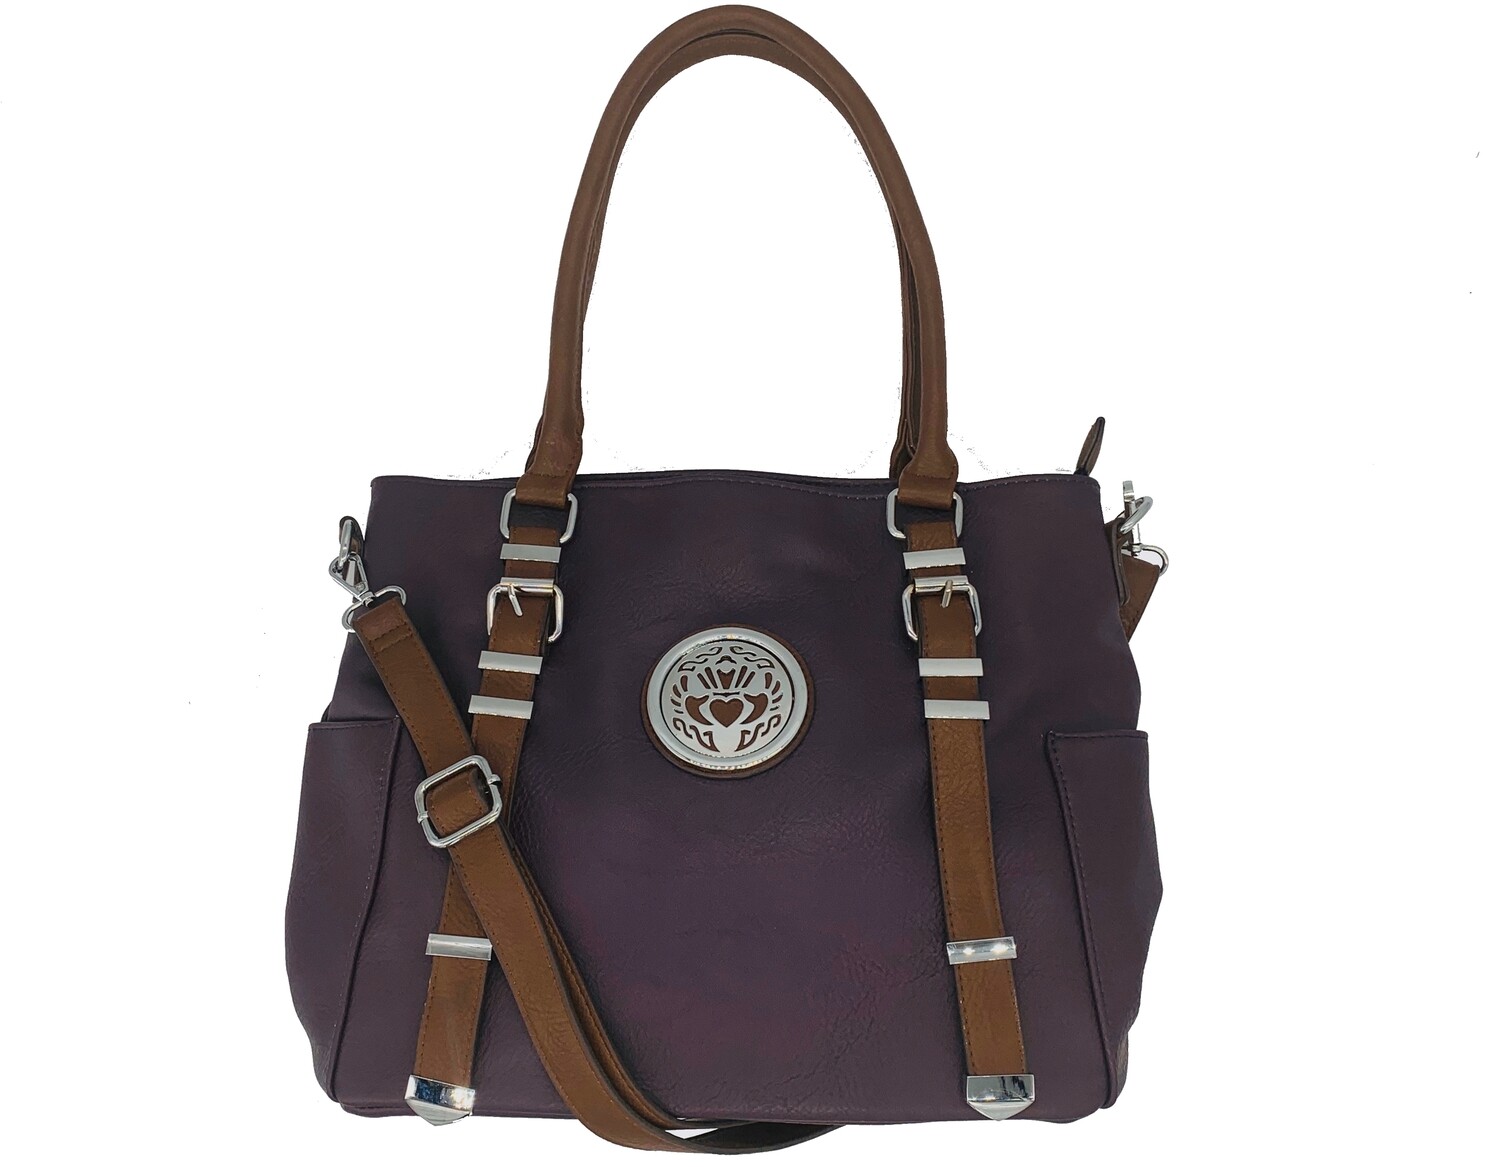 151 Buckle Bag purple